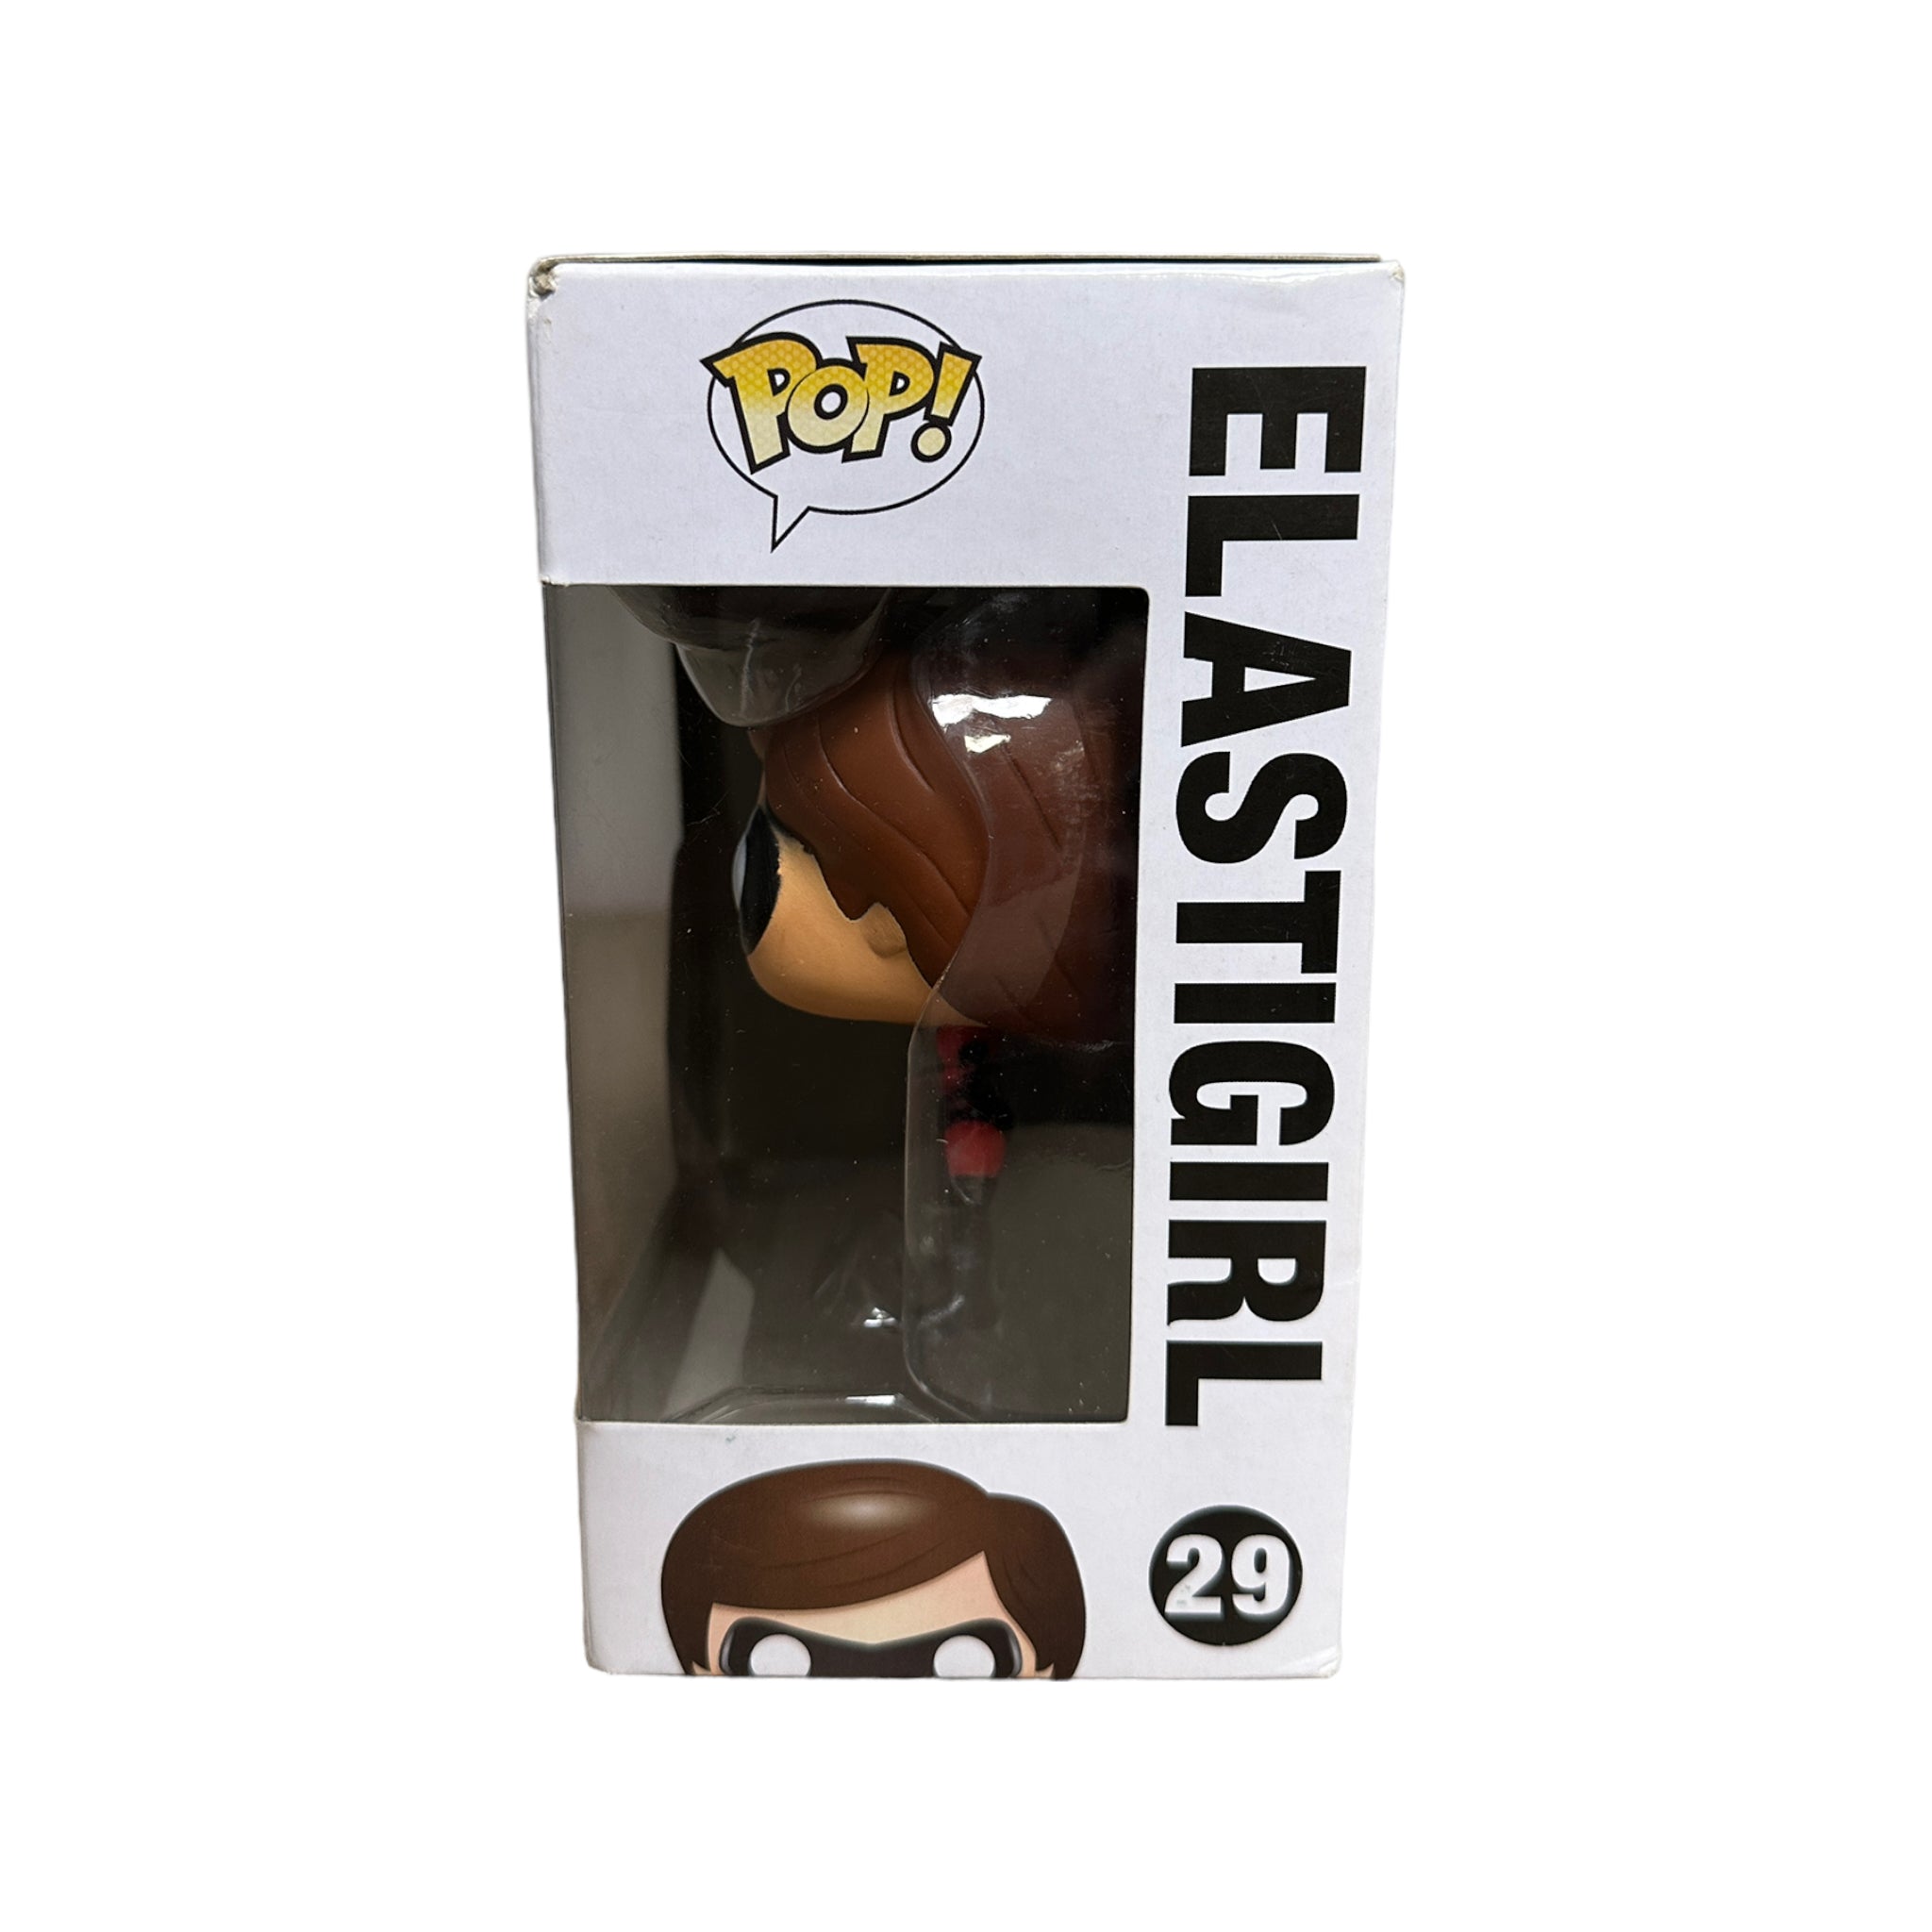 Elastigirl #29 (Disney Store Logo) Funko Pop! - Disney Series 3 - 2011 Pop! - Condition 6/10